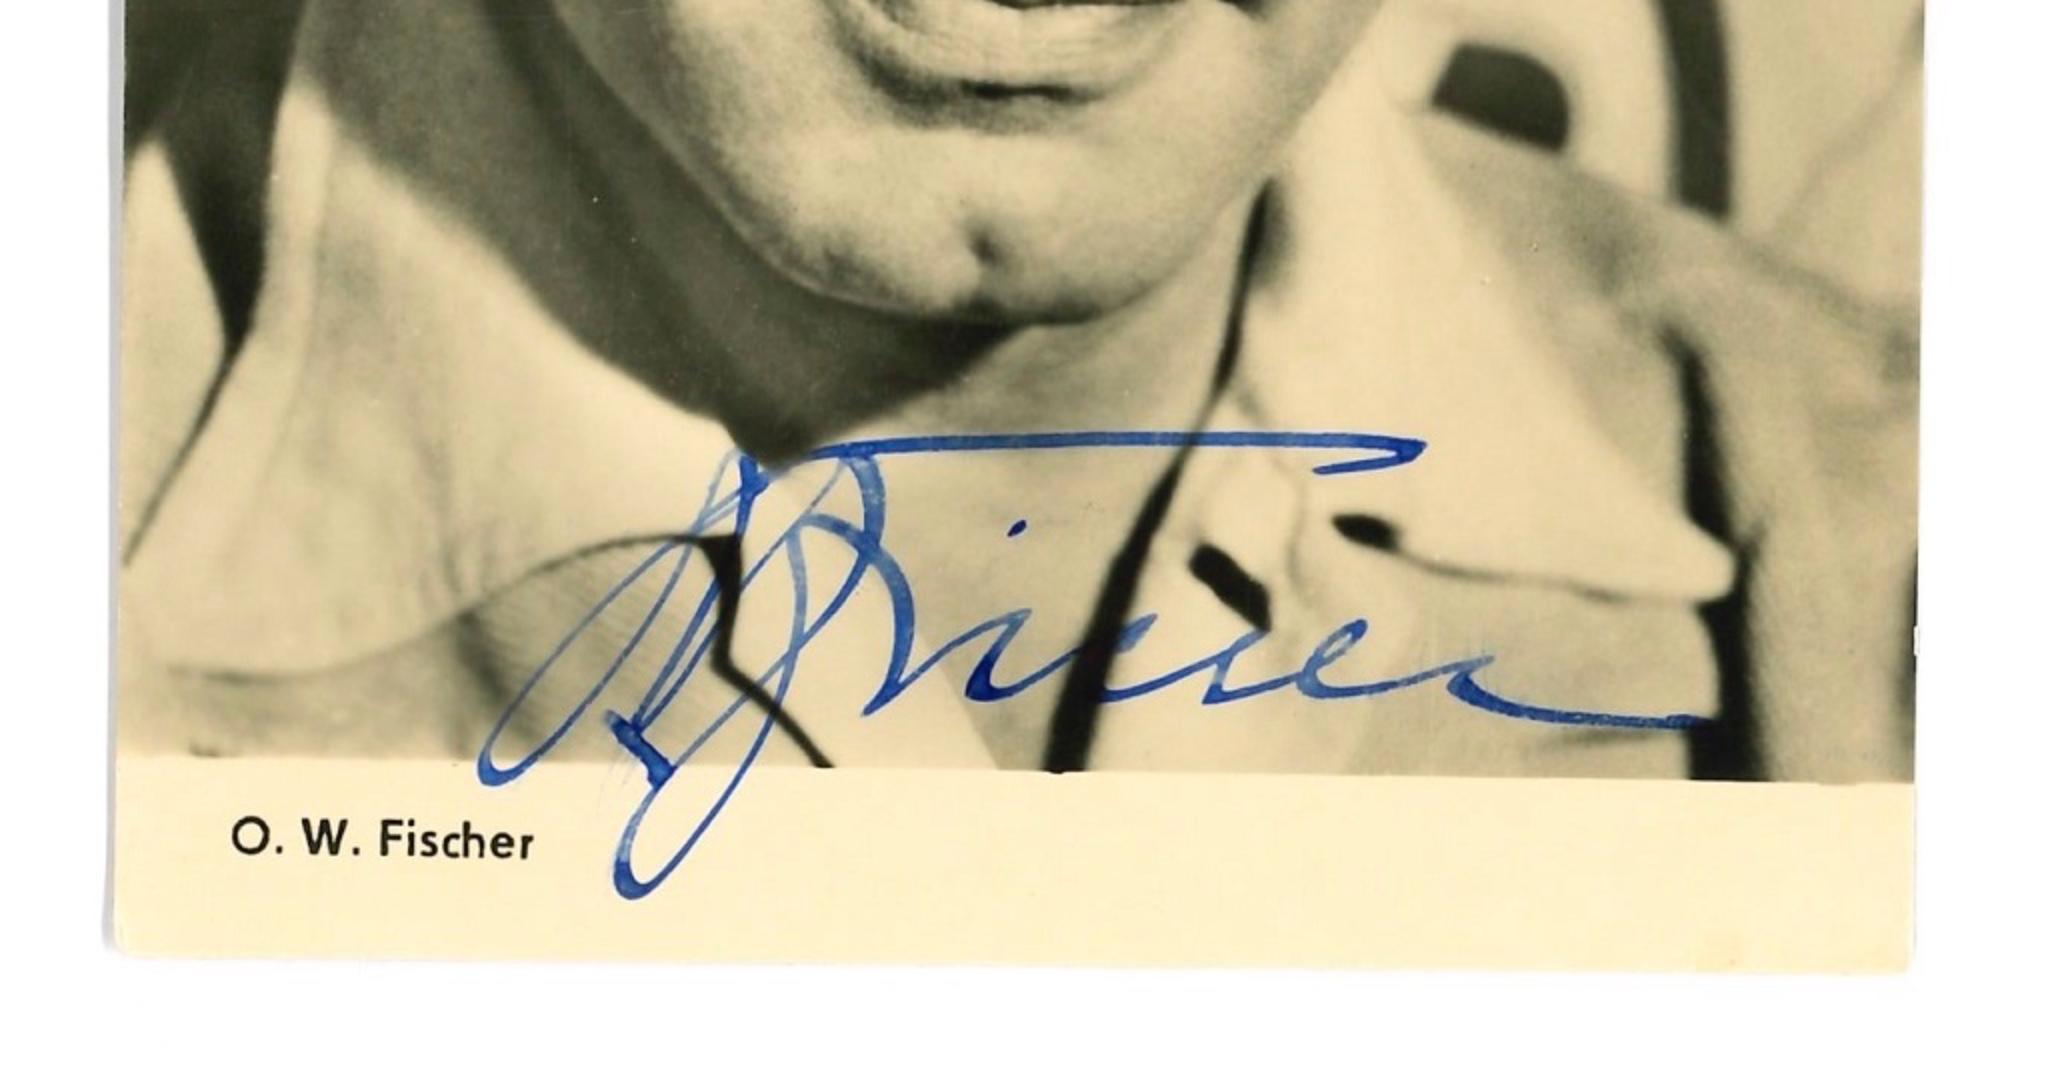 Autographed Portrait of O. W. Fischer - Vintage b/w Postcard - 1960s - Photograph by Unknown